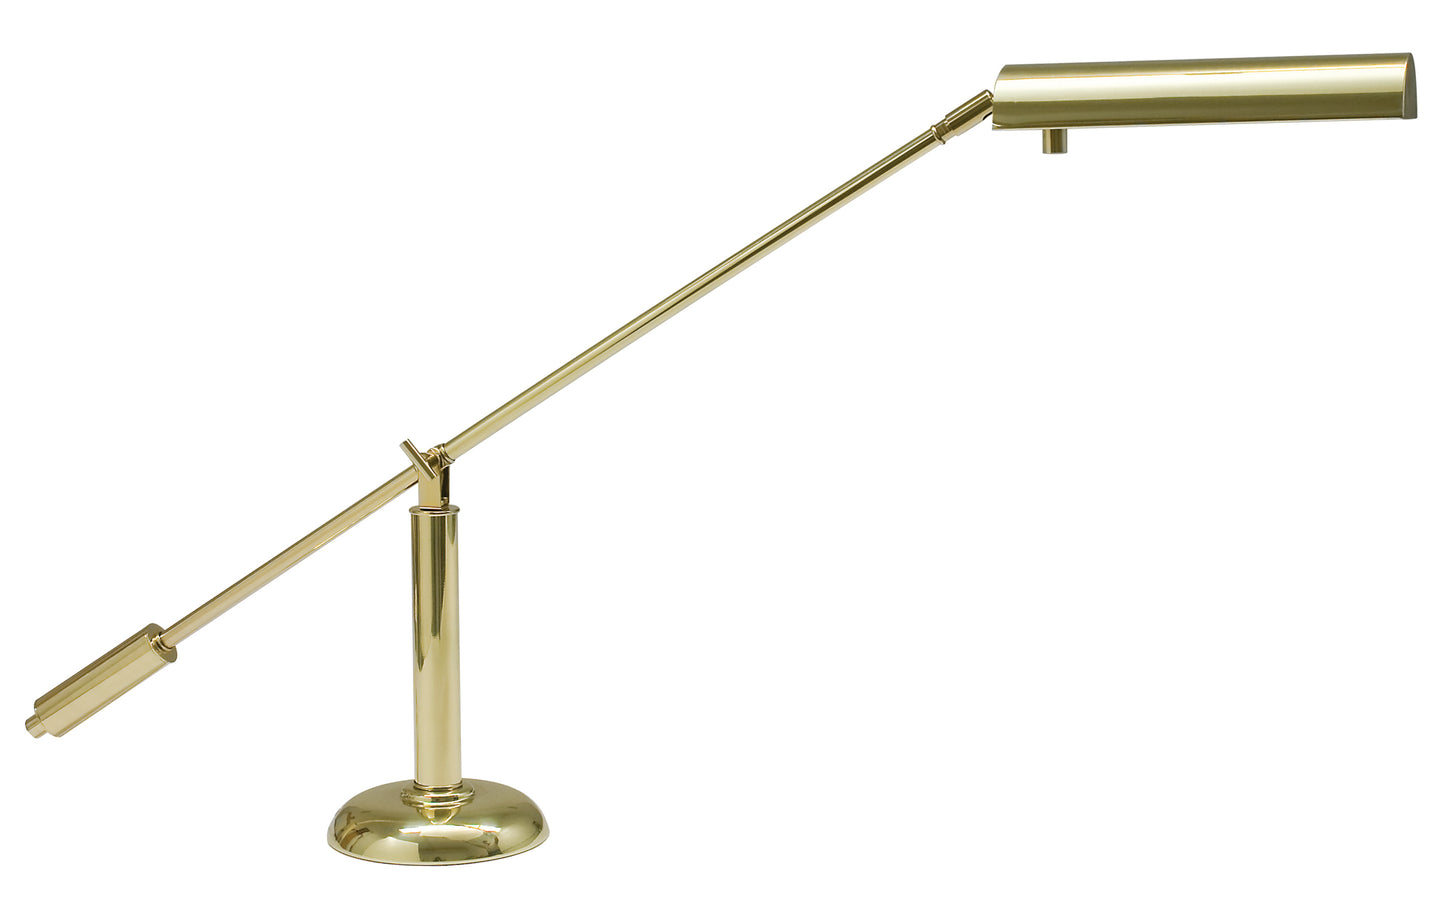 House of Troy Counter Balance Polished Brass Piano Desk Lamp PH10-195-PB